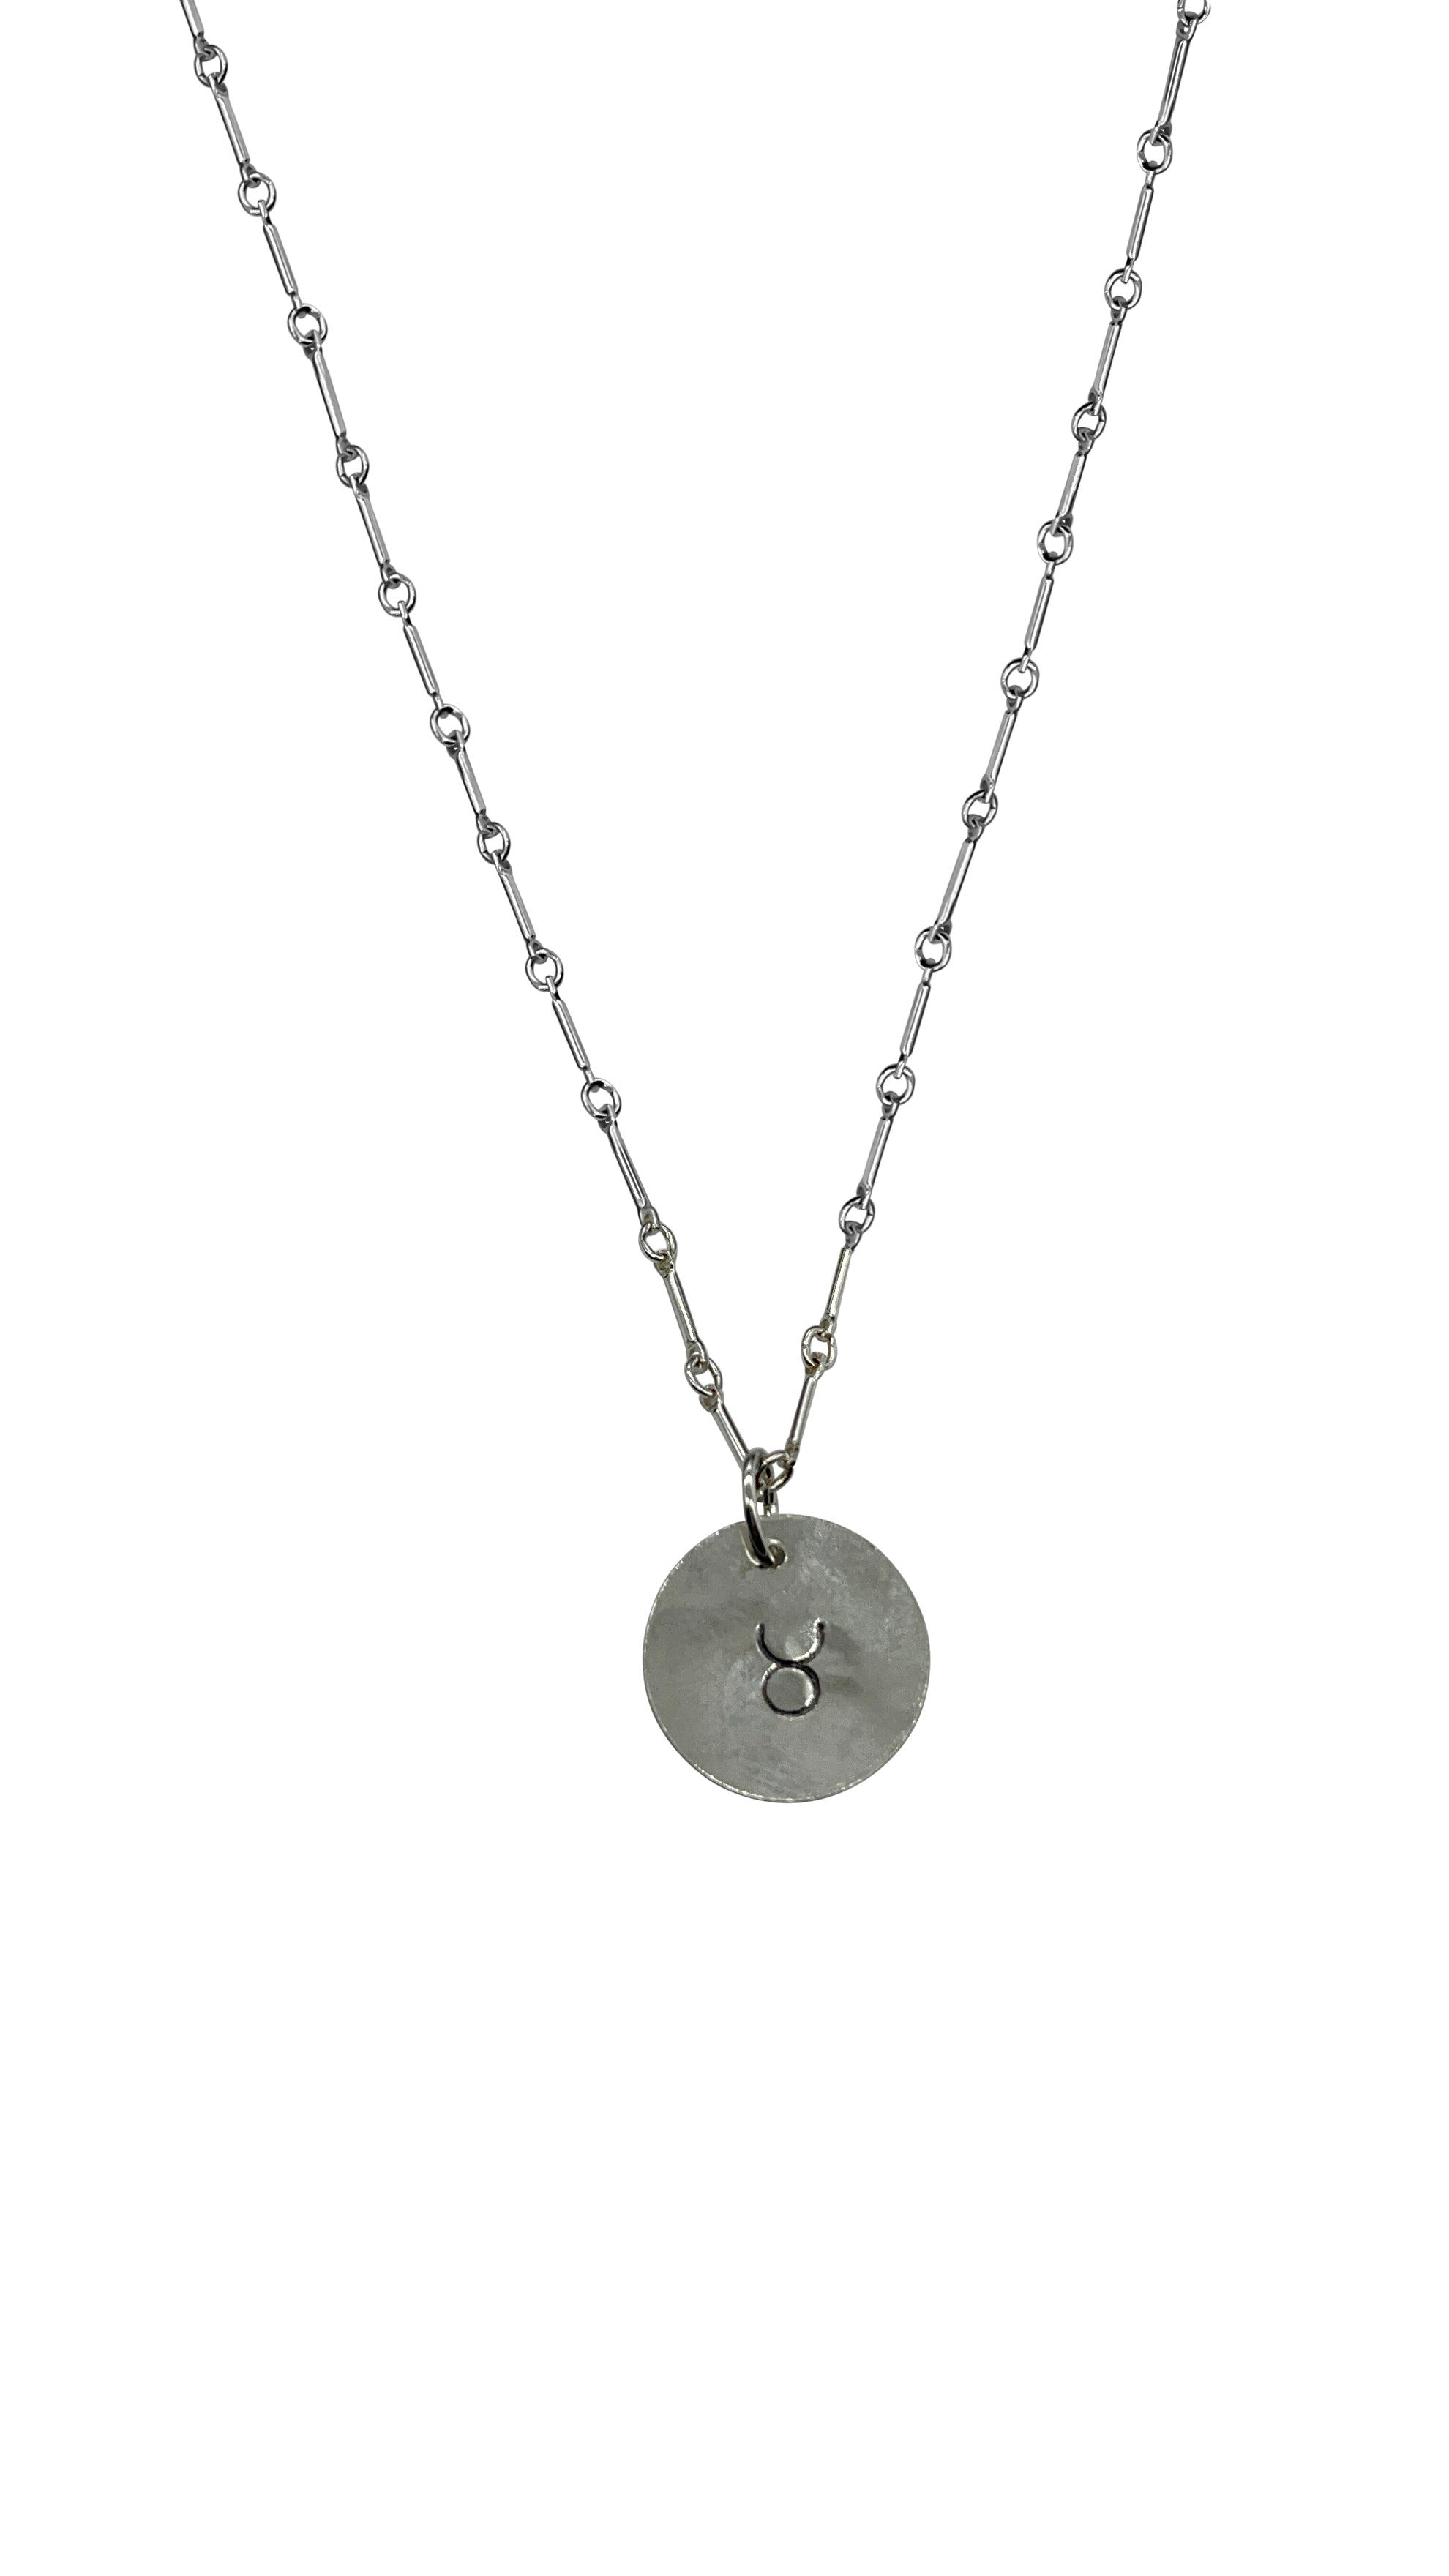 Taurus Zodiac Argentium Silver Necklace Straight Bar and Link Chain - Nickel Free